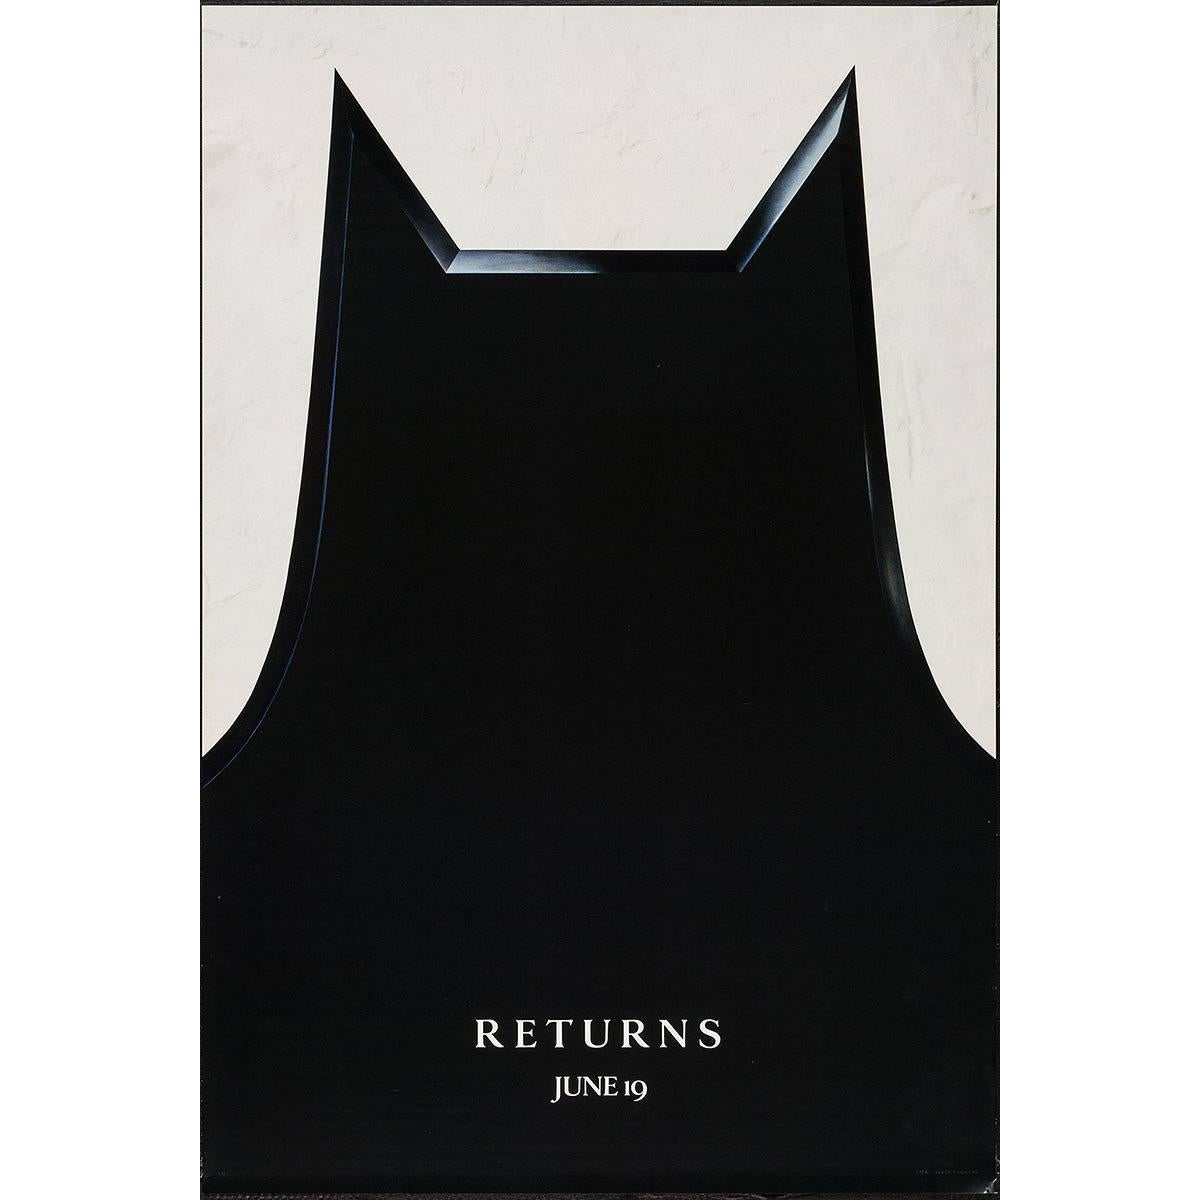 "Batman Returns" Film Poster, 1992 For Sale